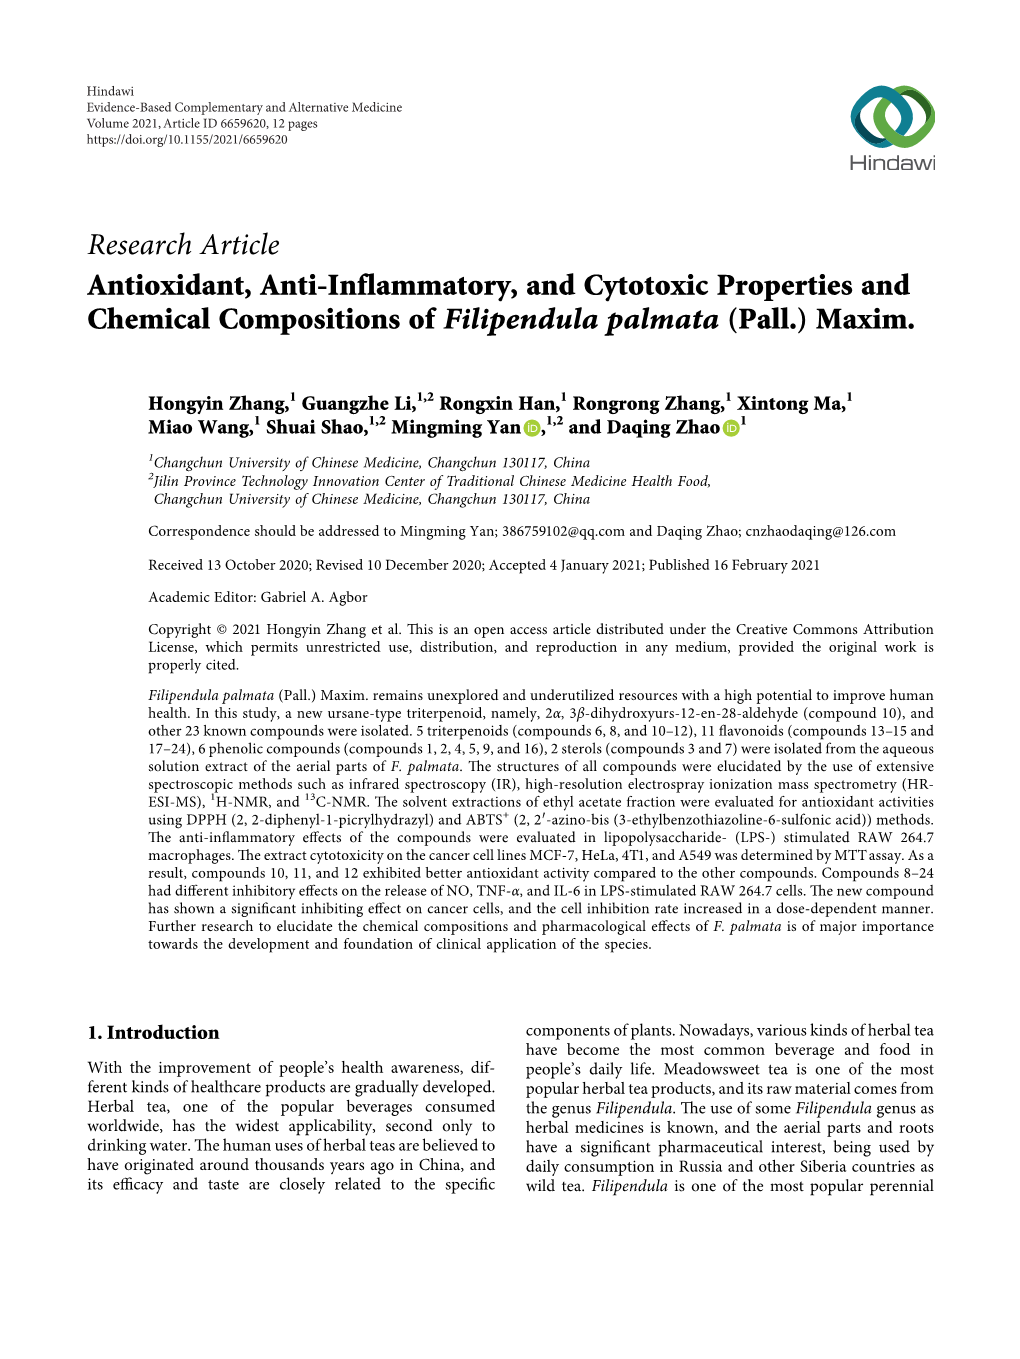 Research Article Antioxidant, Anti-Inflammatory, and Cytotoxic Properties and Chemical Compositions of Filipendula Palmata (Pall.) Maxim